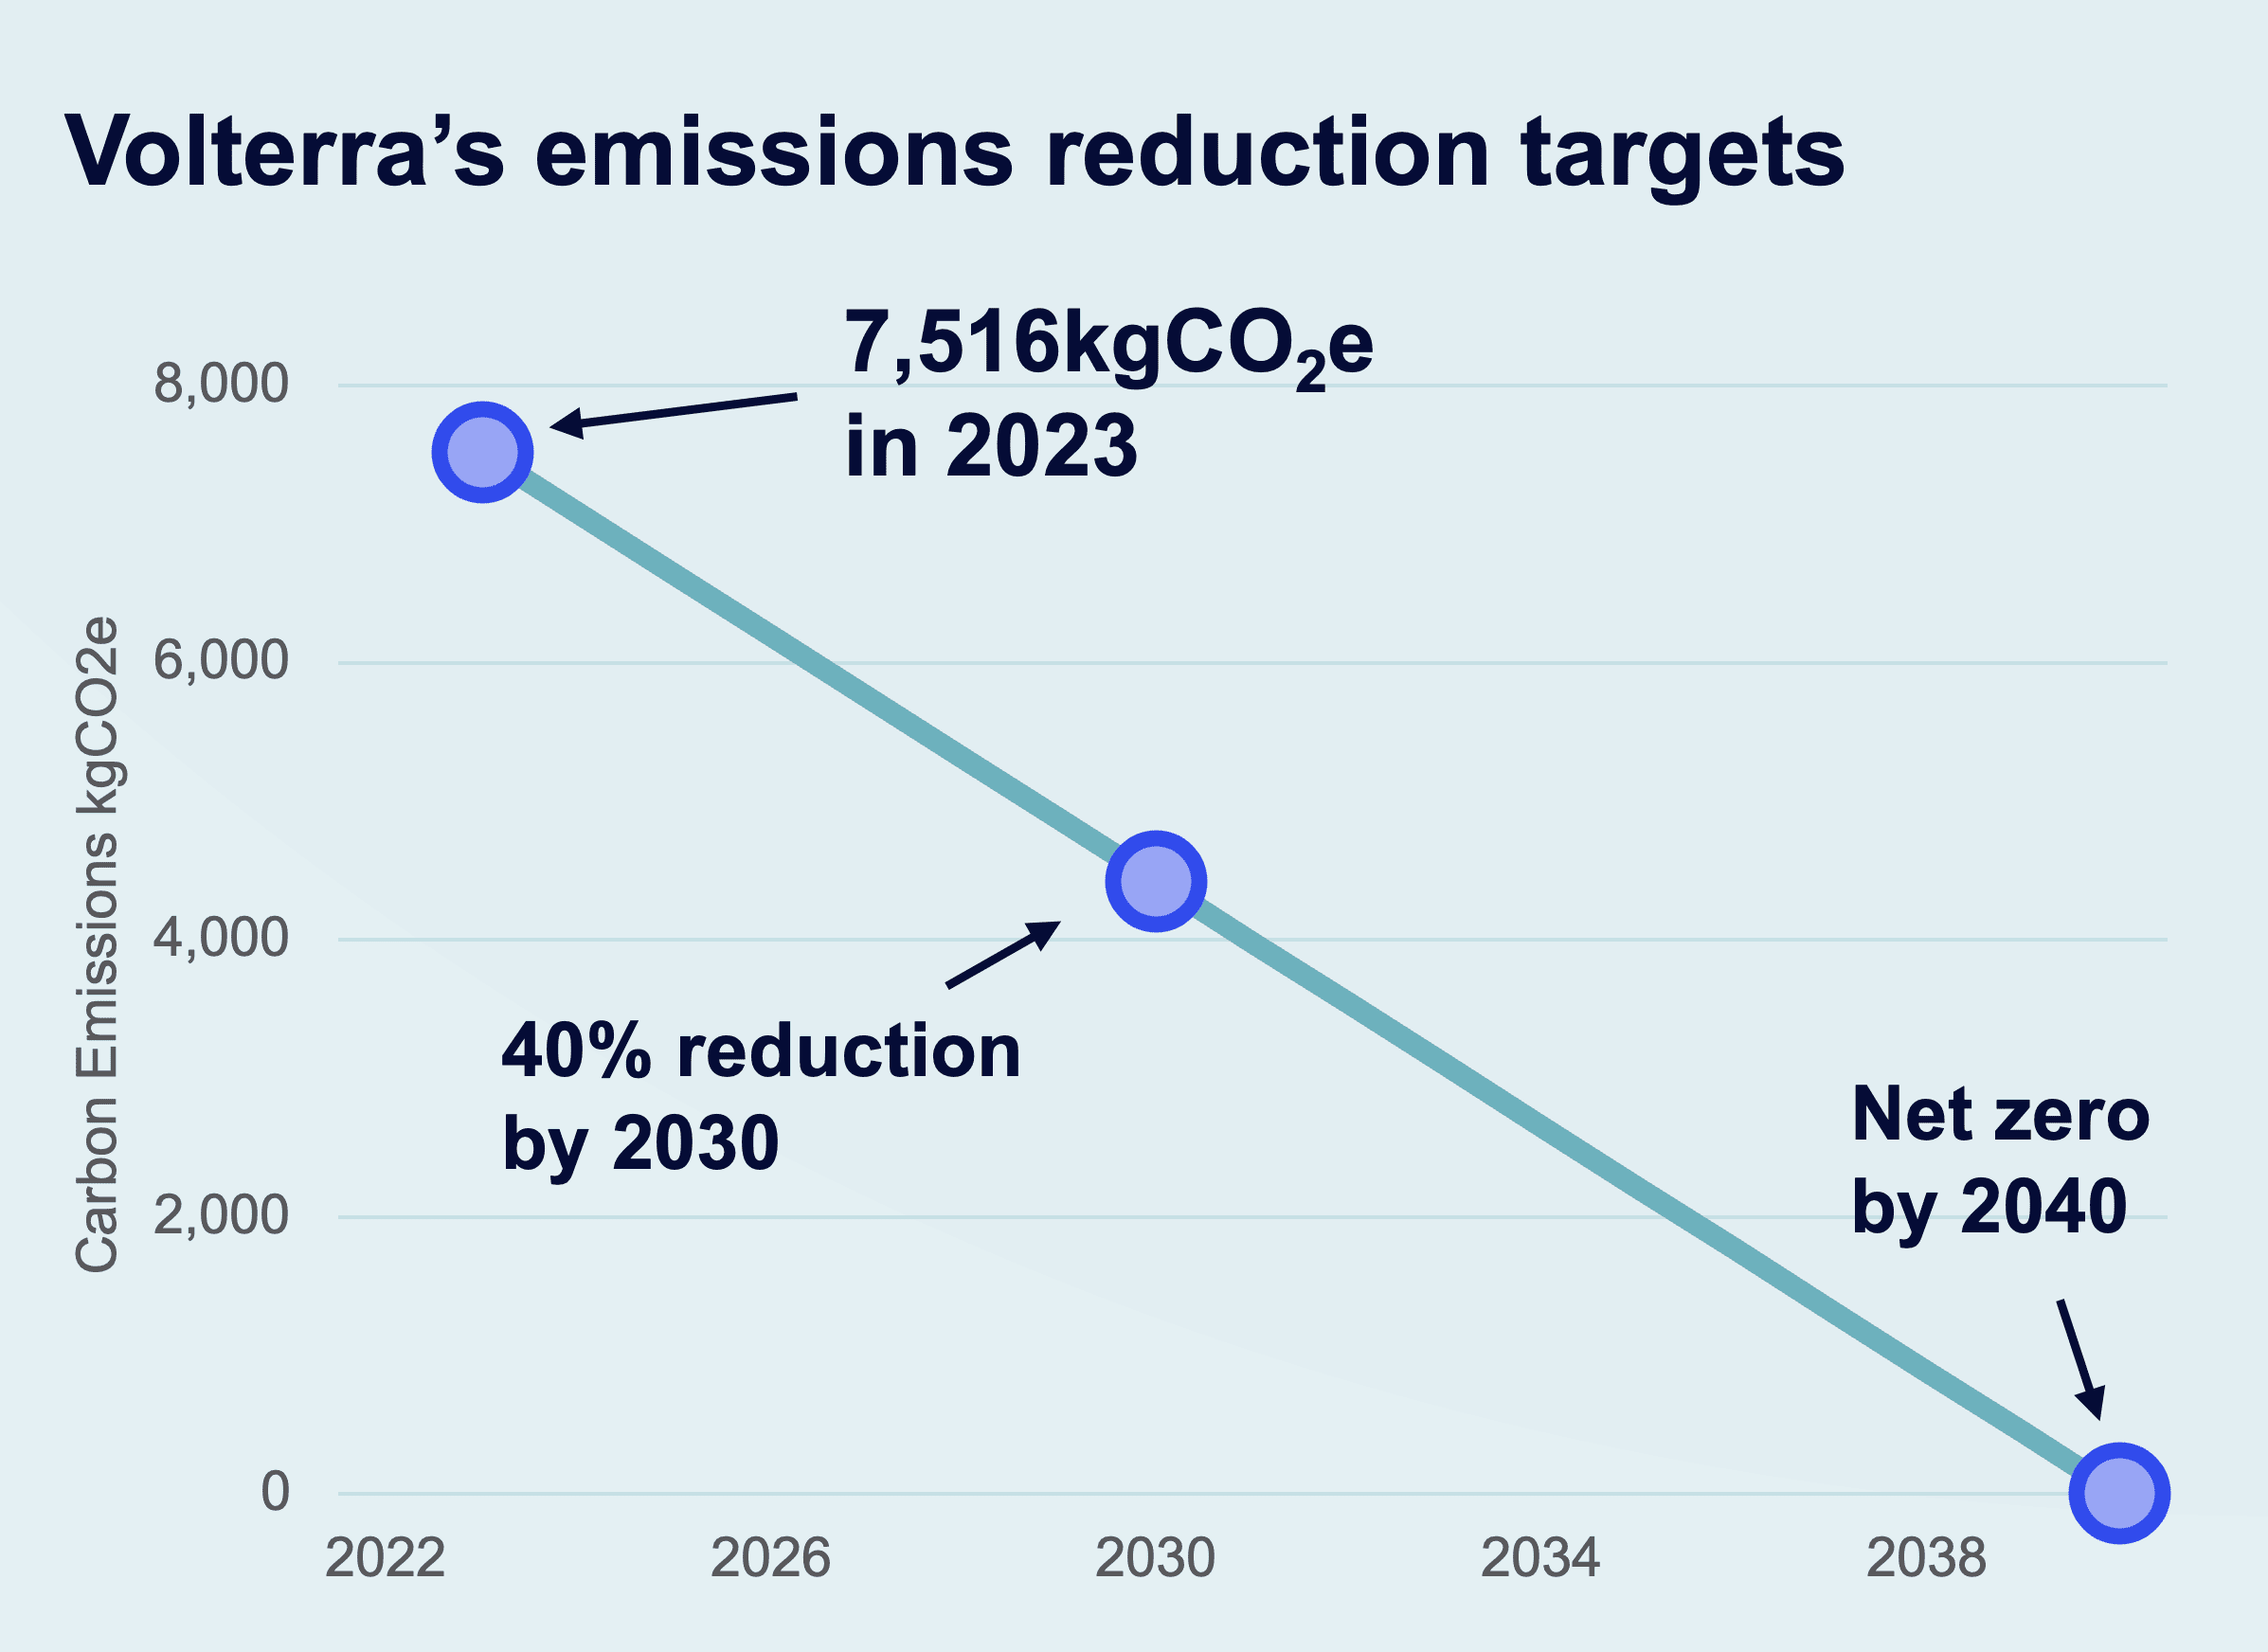 Volterra emissions reduction targets